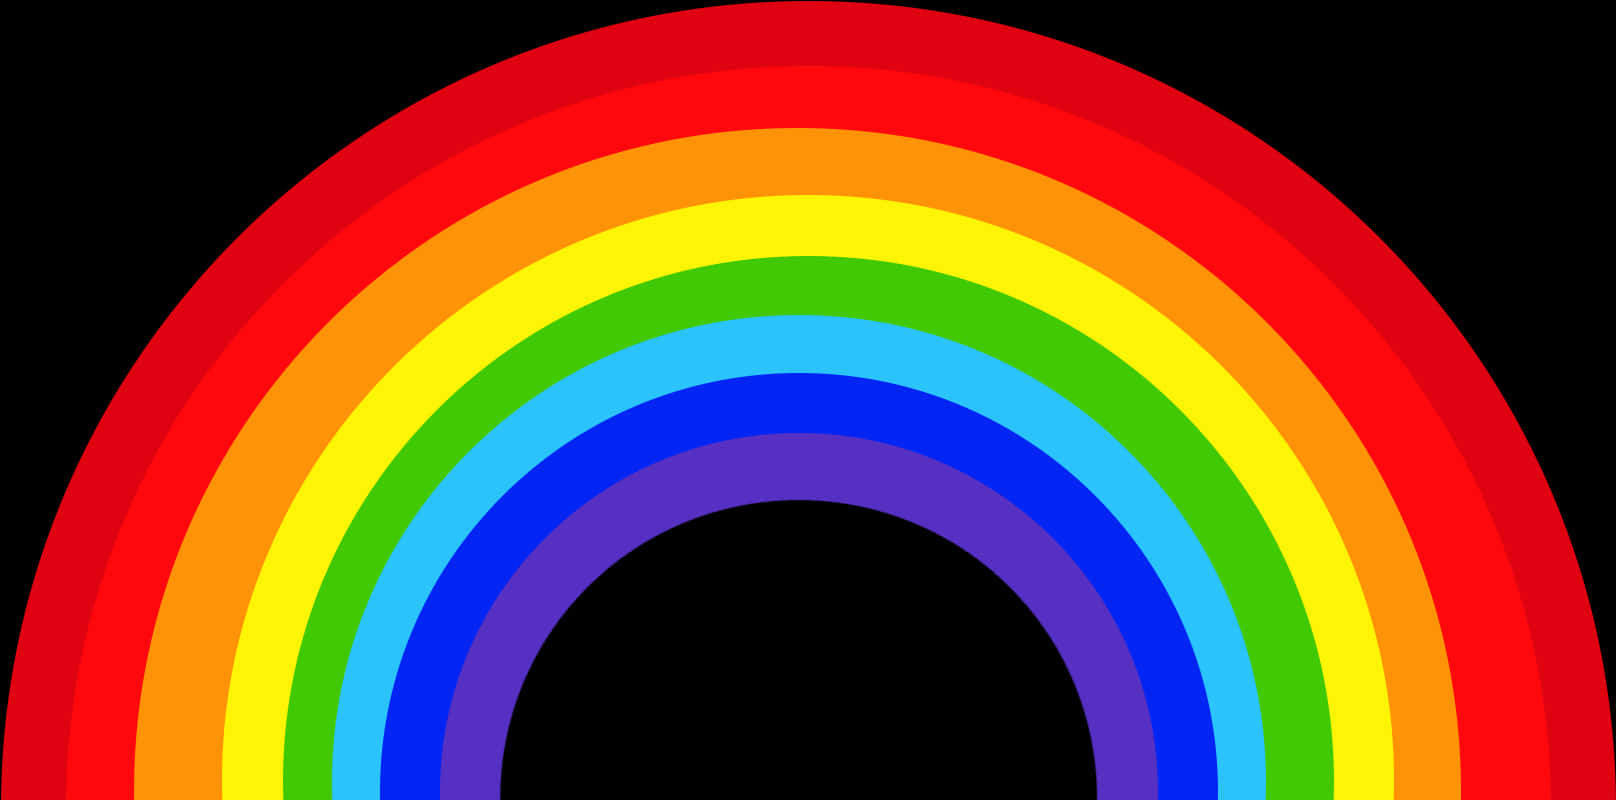 Vibrant Rainbow Artwork PNG image